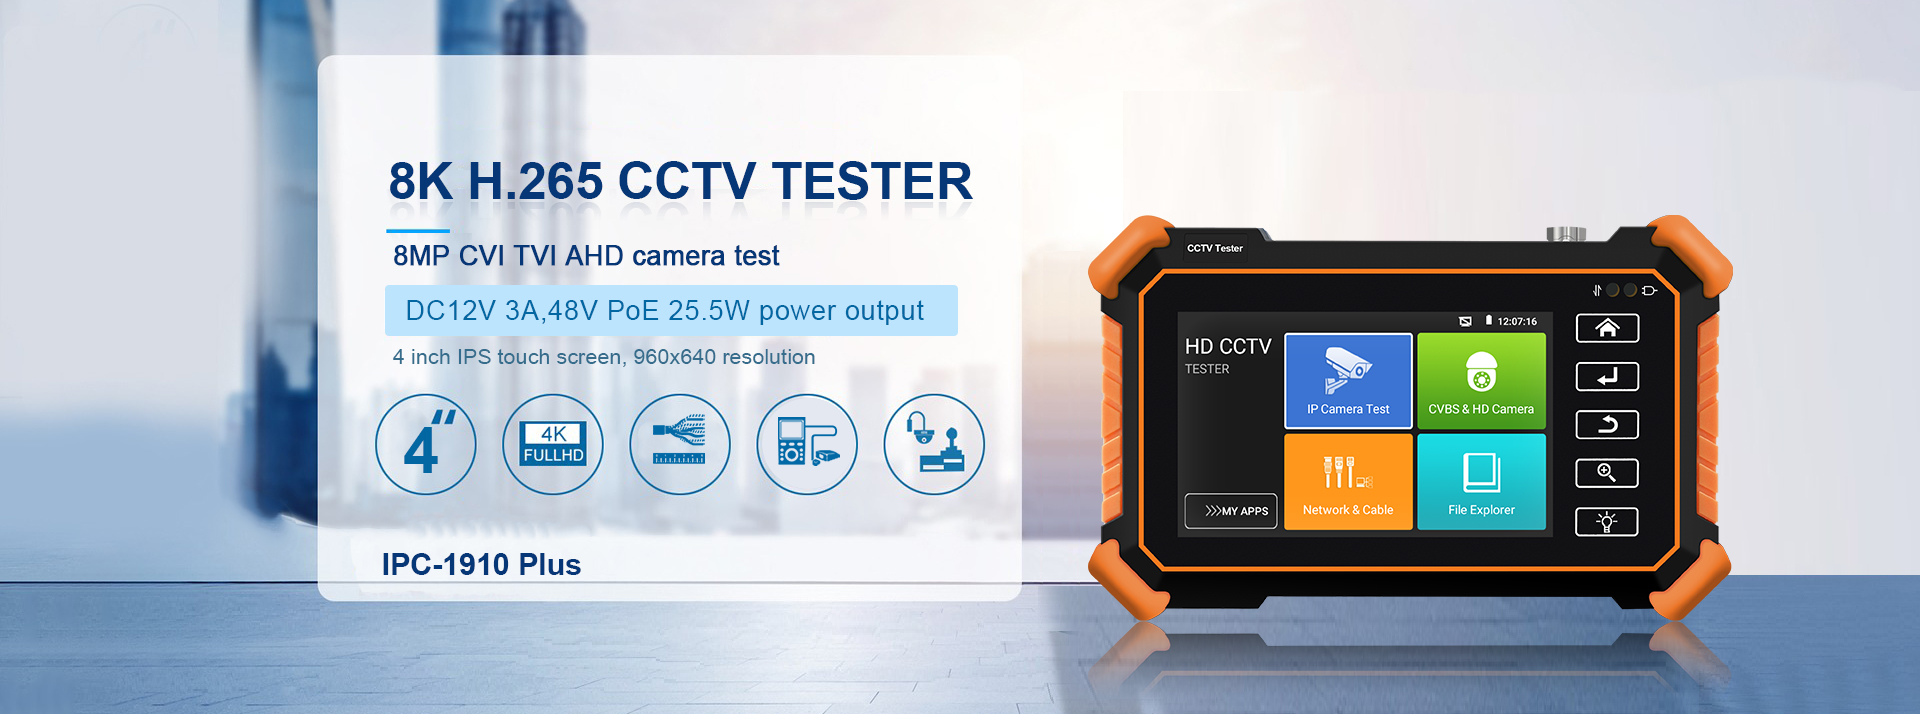 CCTV TESTER X4 series